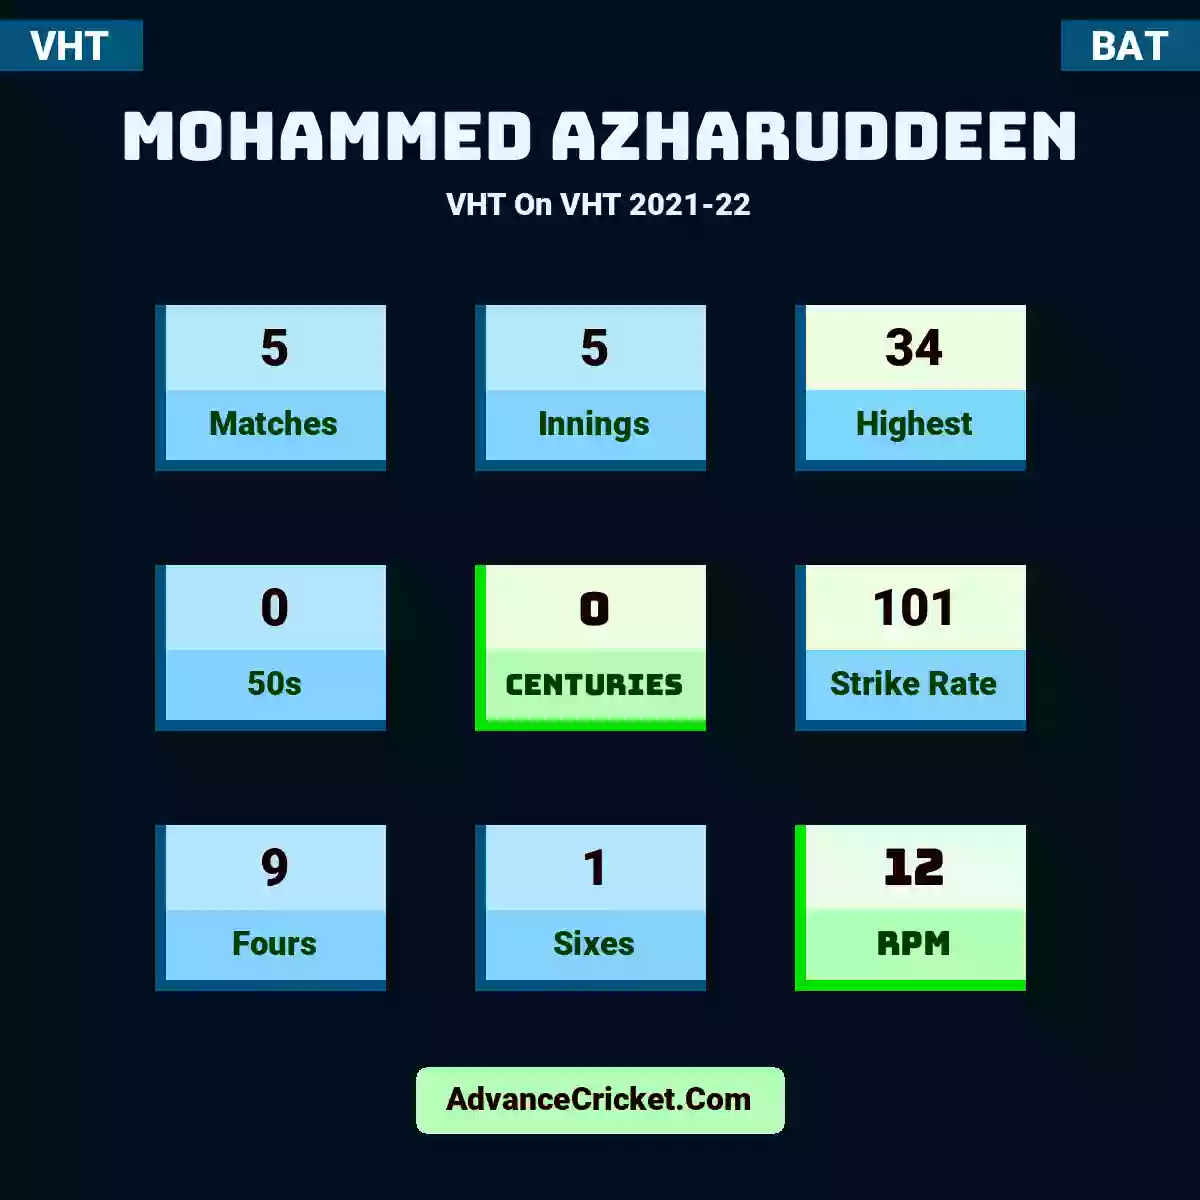 Mohammed Azharuddeen VHT  On VHT 2021-22, Mohammed Azharuddeen played 5 matches, scored 34 runs as highest, 0 half-centuries, and 0 centuries, with a strike rate of 101. M.Azharuddeen hit 9 fours and 1 sixes, with an RPM of 12.